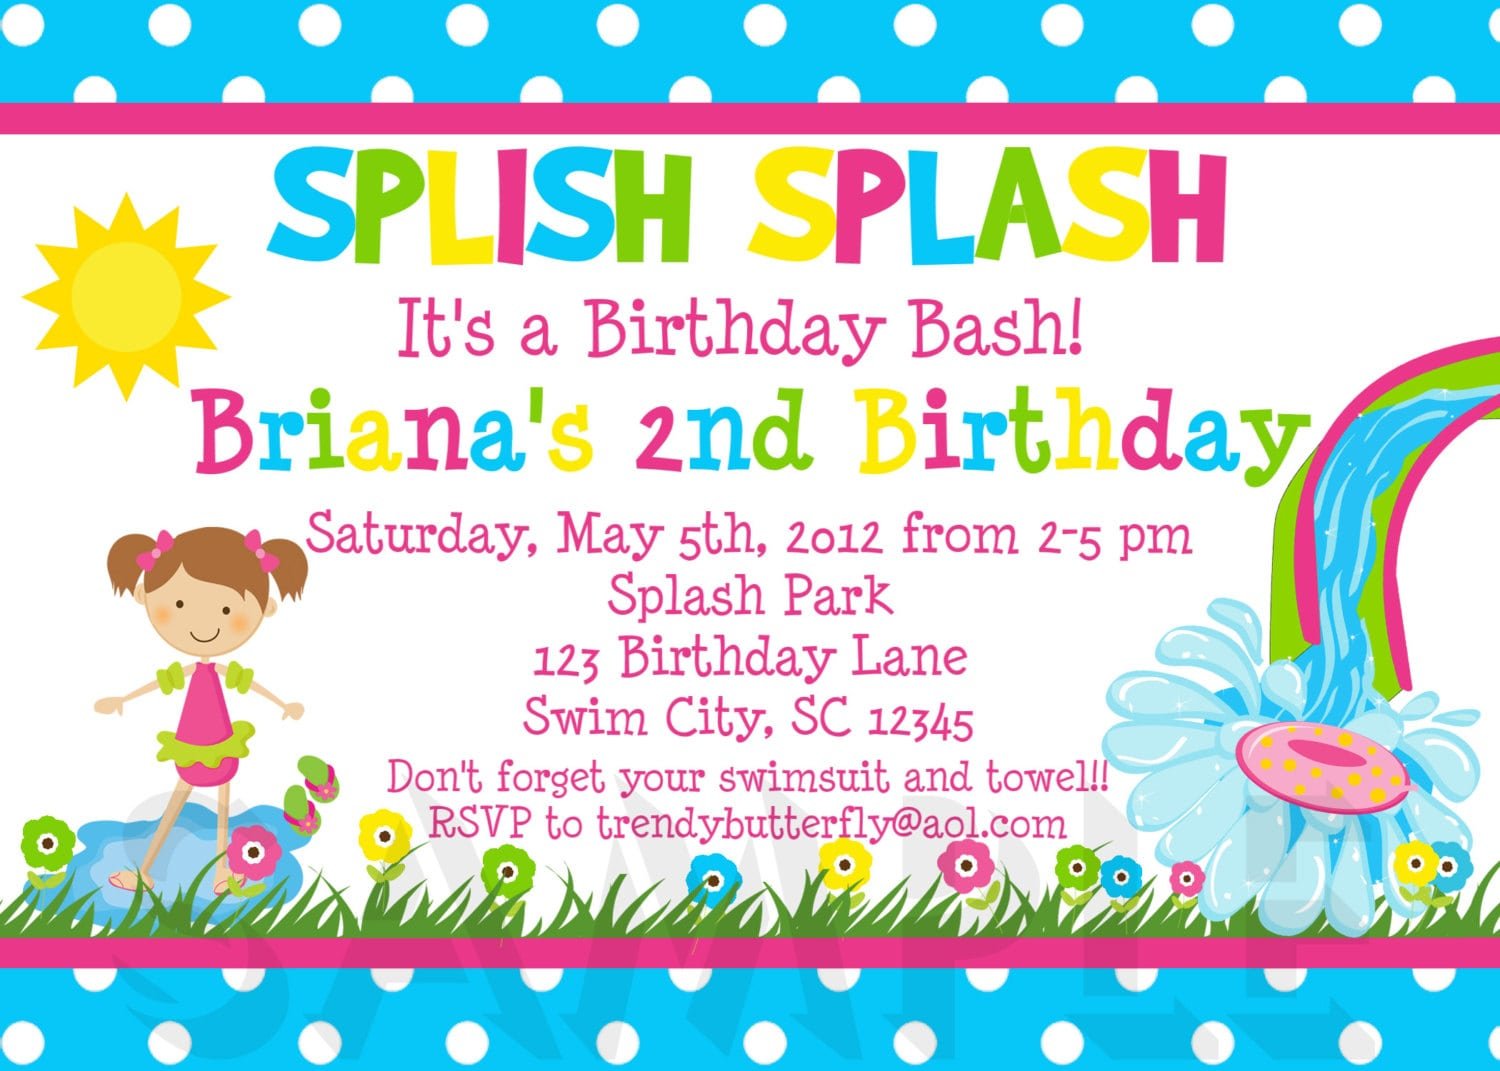 Sample Birthday Party Invitations